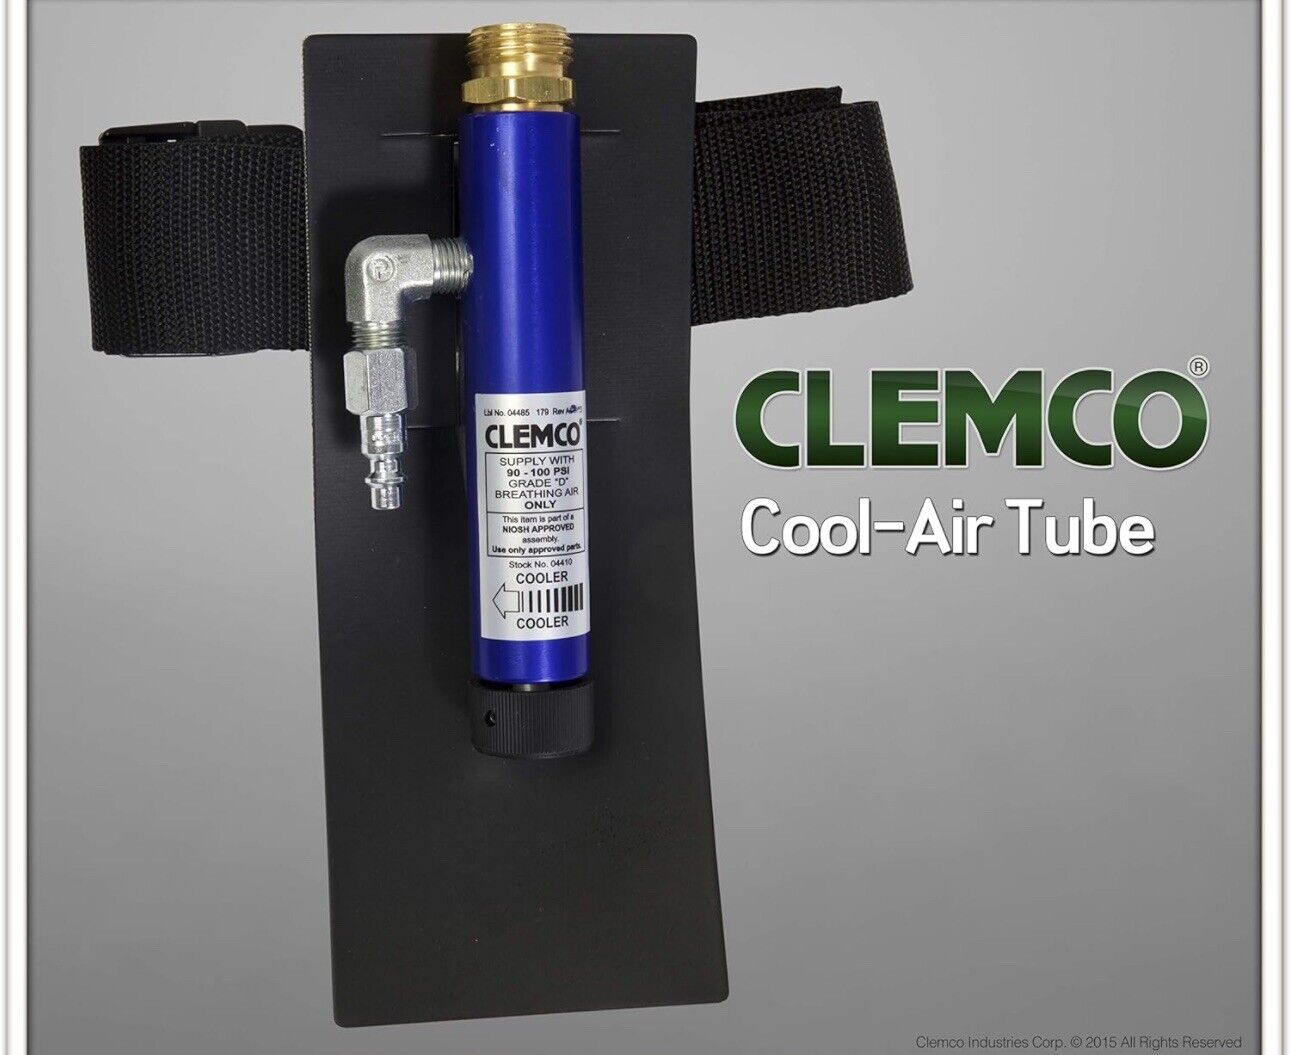 Clemco 04410 Cool Air Tube Model CAT O.M. 08956 90-100 PSI Grade D Breathing Air